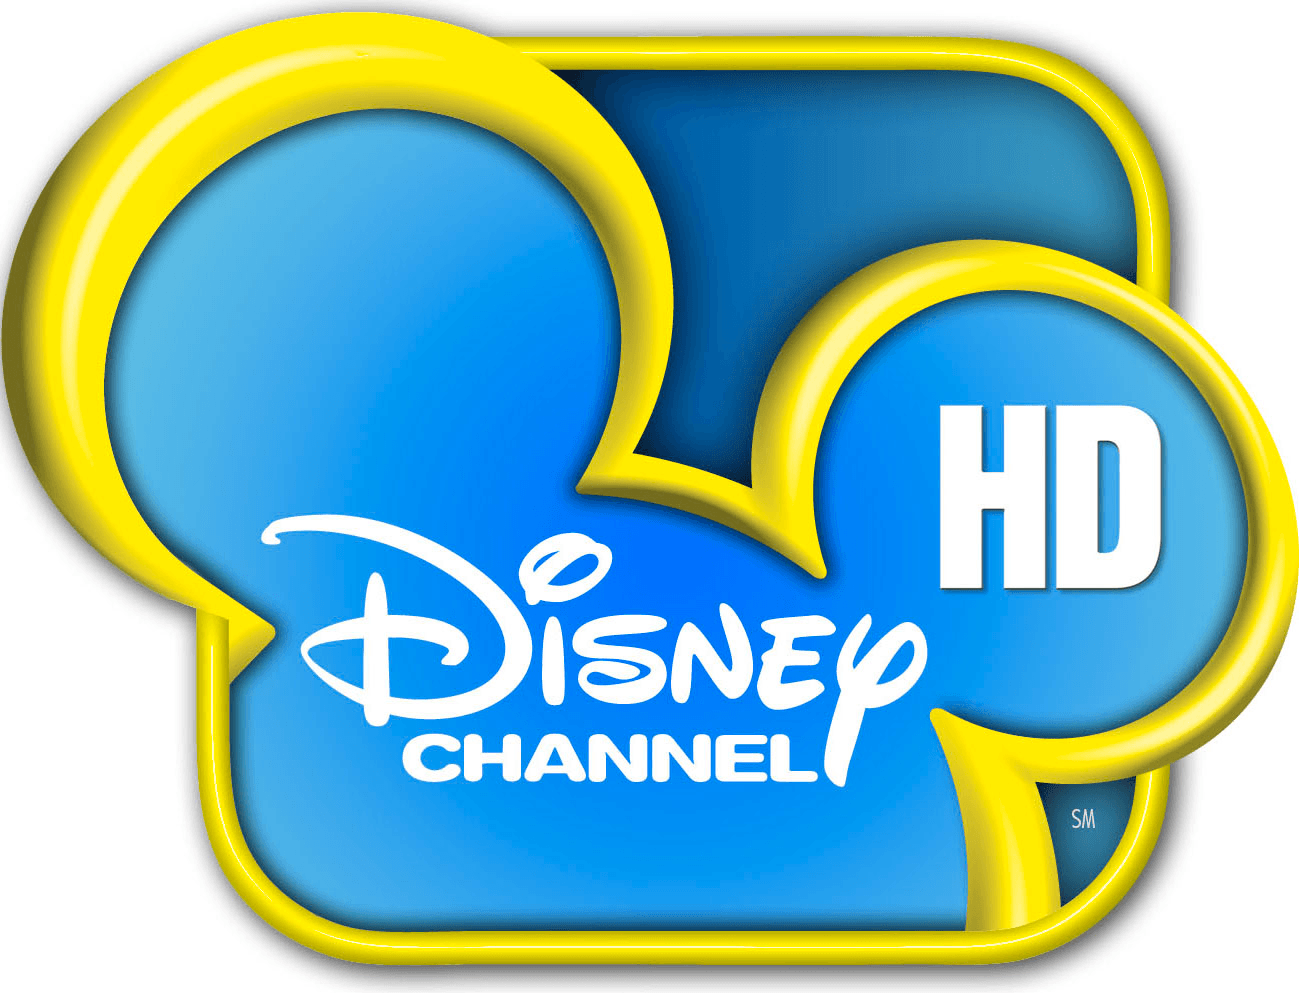 Disney XD HD Logo - Disney HD PNG Transparent Disney HD.PNG Images. | PlusPNG